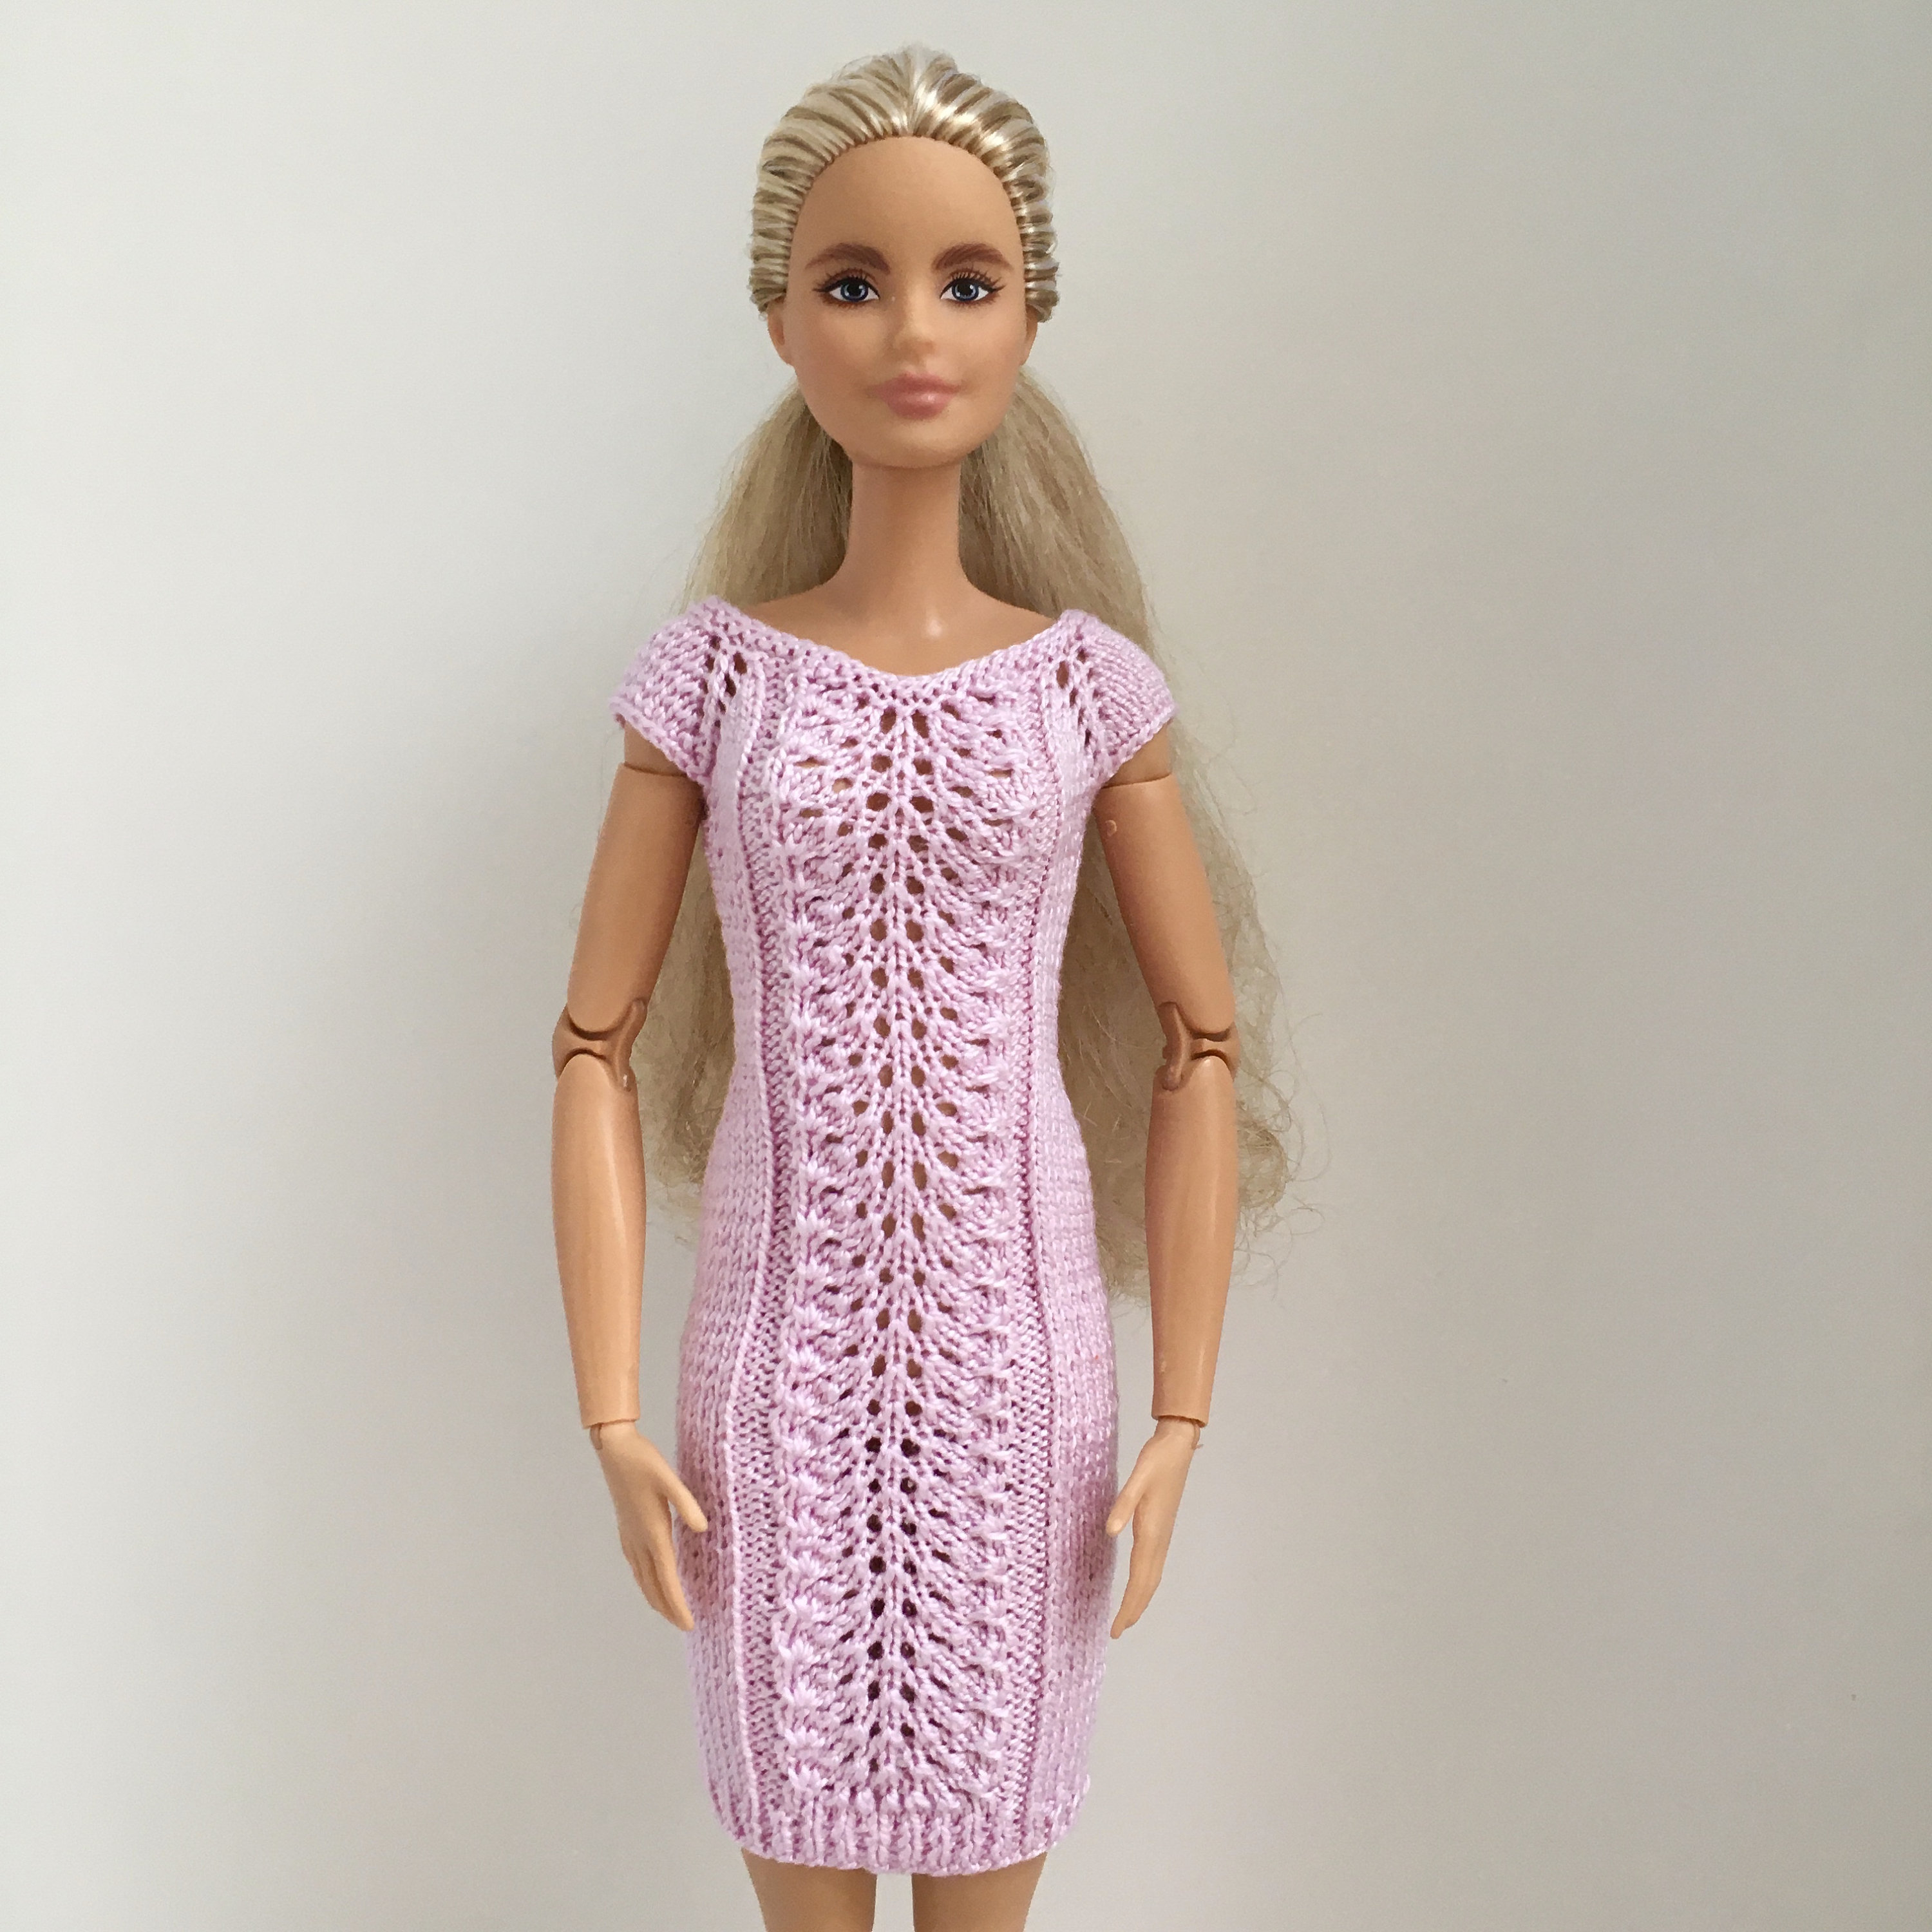 Dress Knitting Pattern for Barbie doll 115 inch doll | Etsy